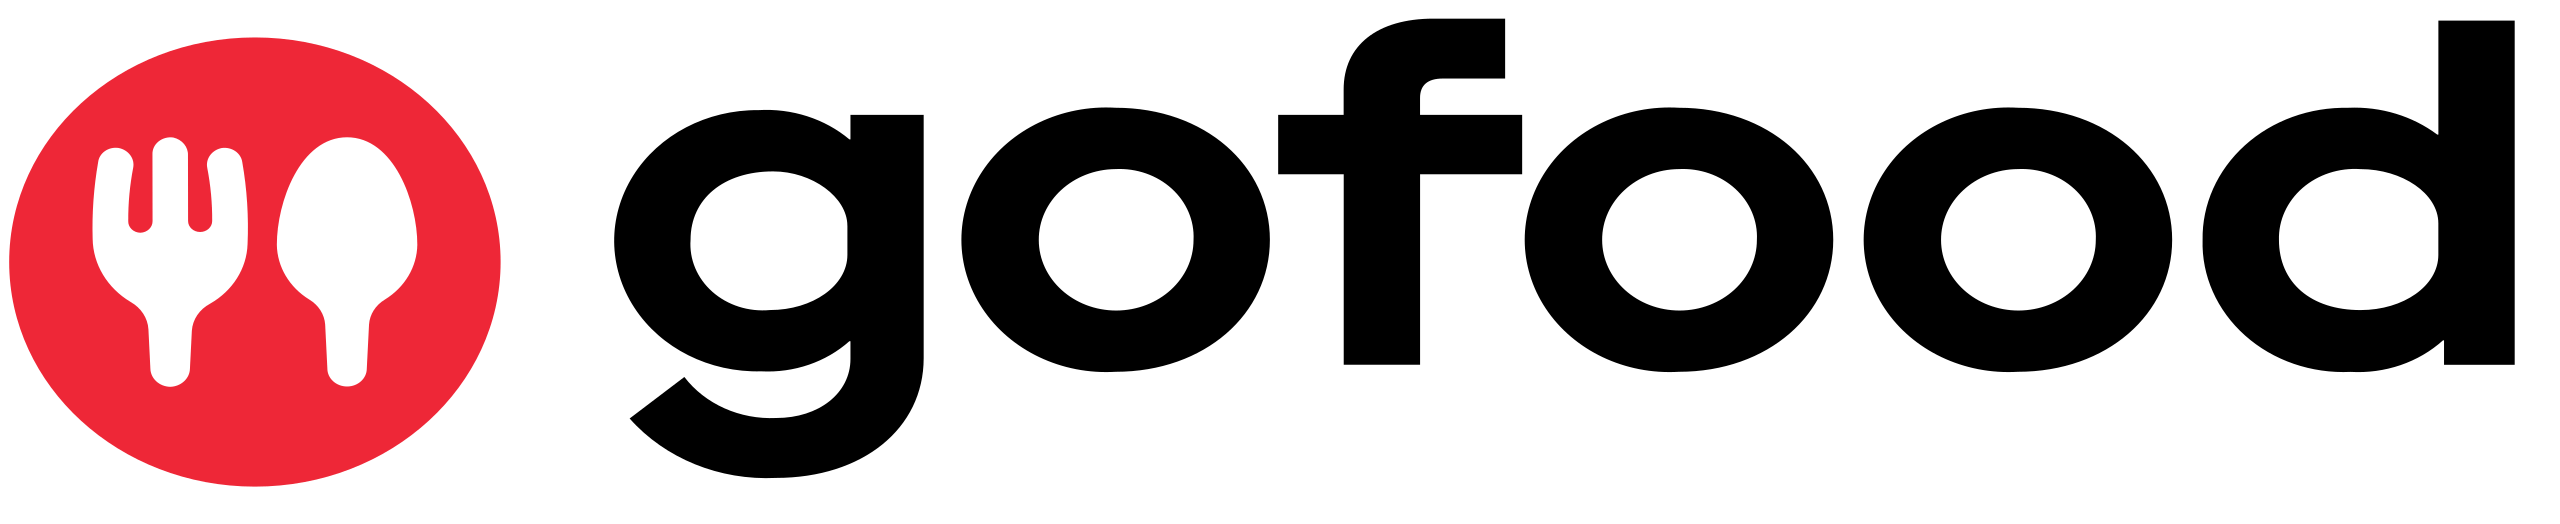 Gojek Logo - Gofood logo.svg